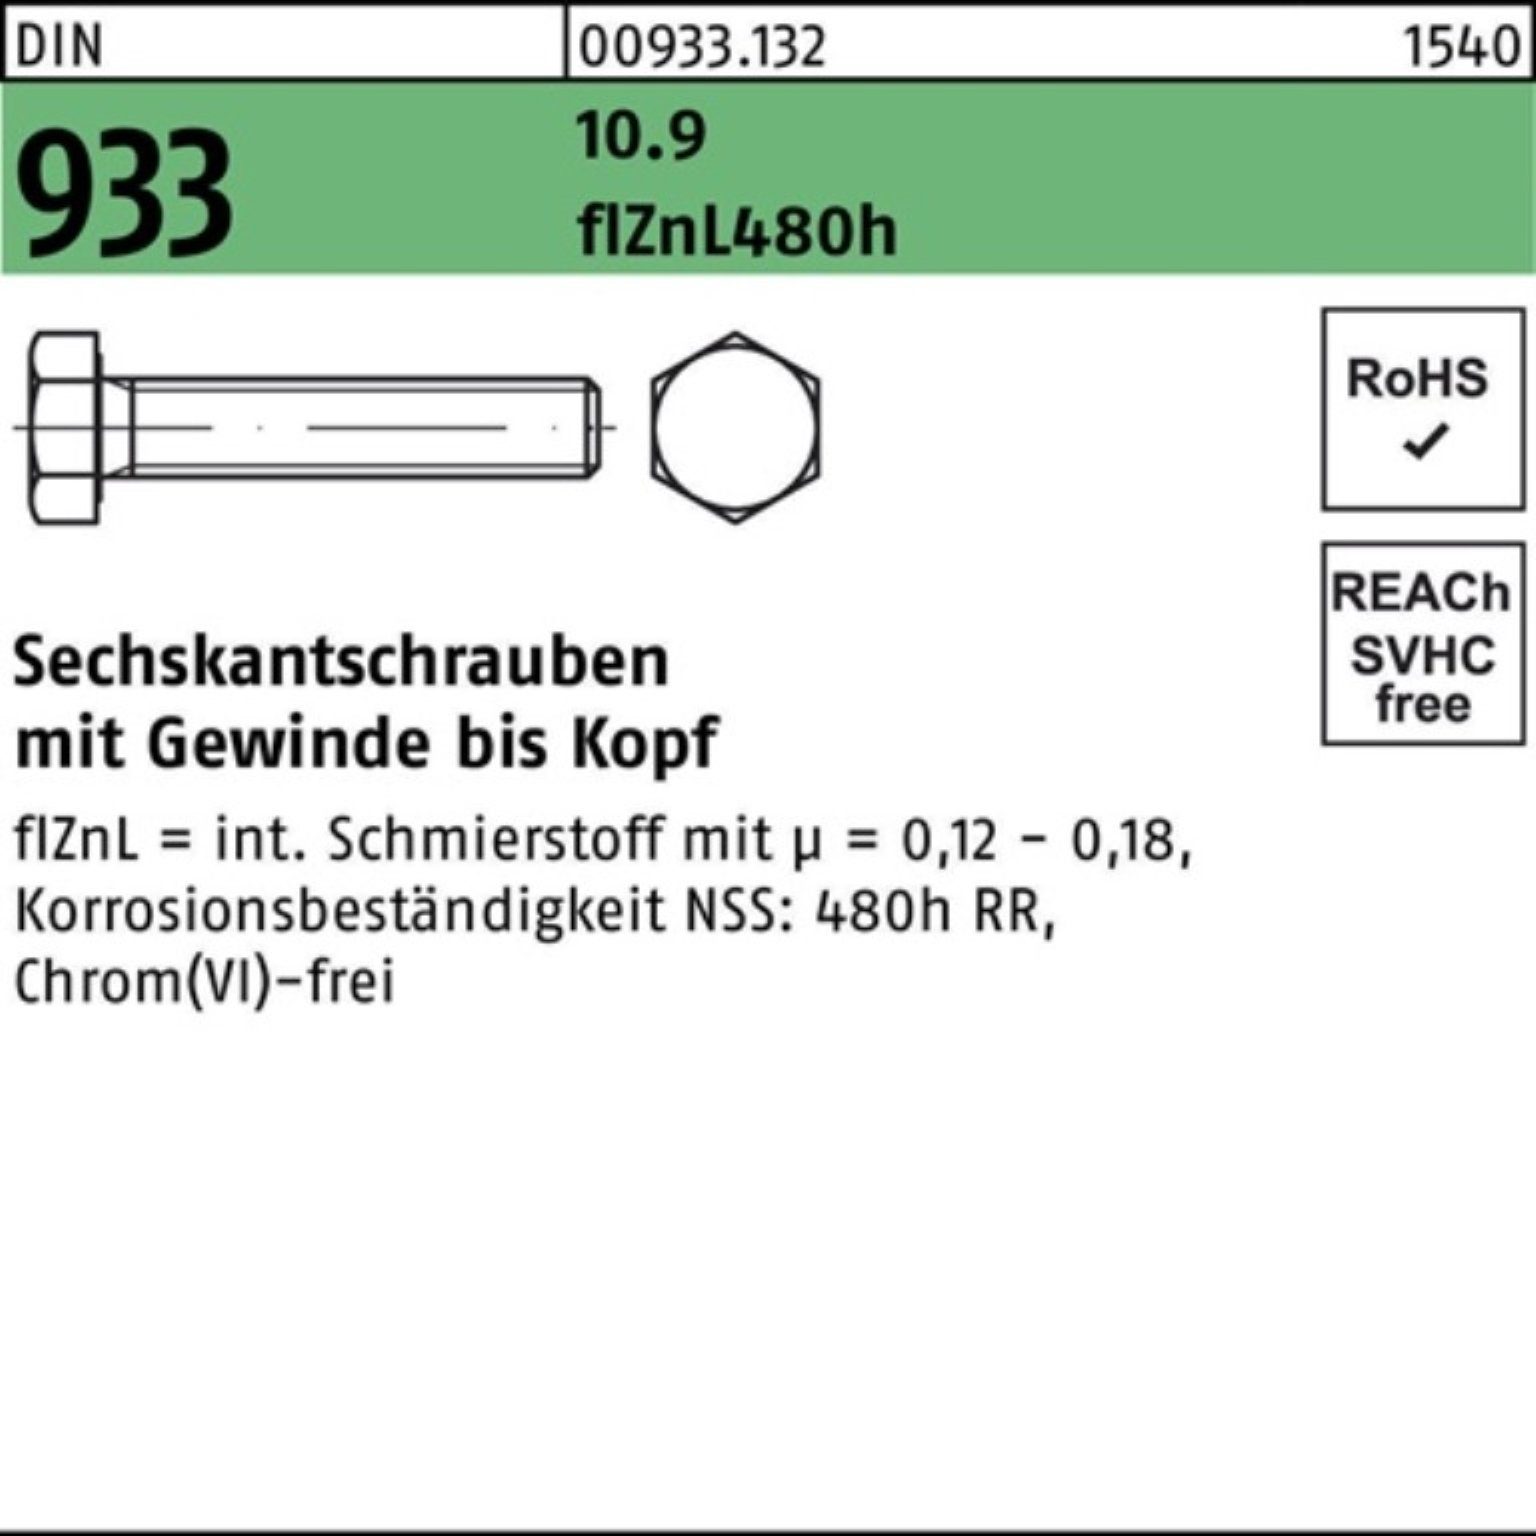 DIN M16x Sechskantschraube 933 10.9 Pack 65 100er Sechskantschraube VG Reyher flZnL/nc/x/x/480h